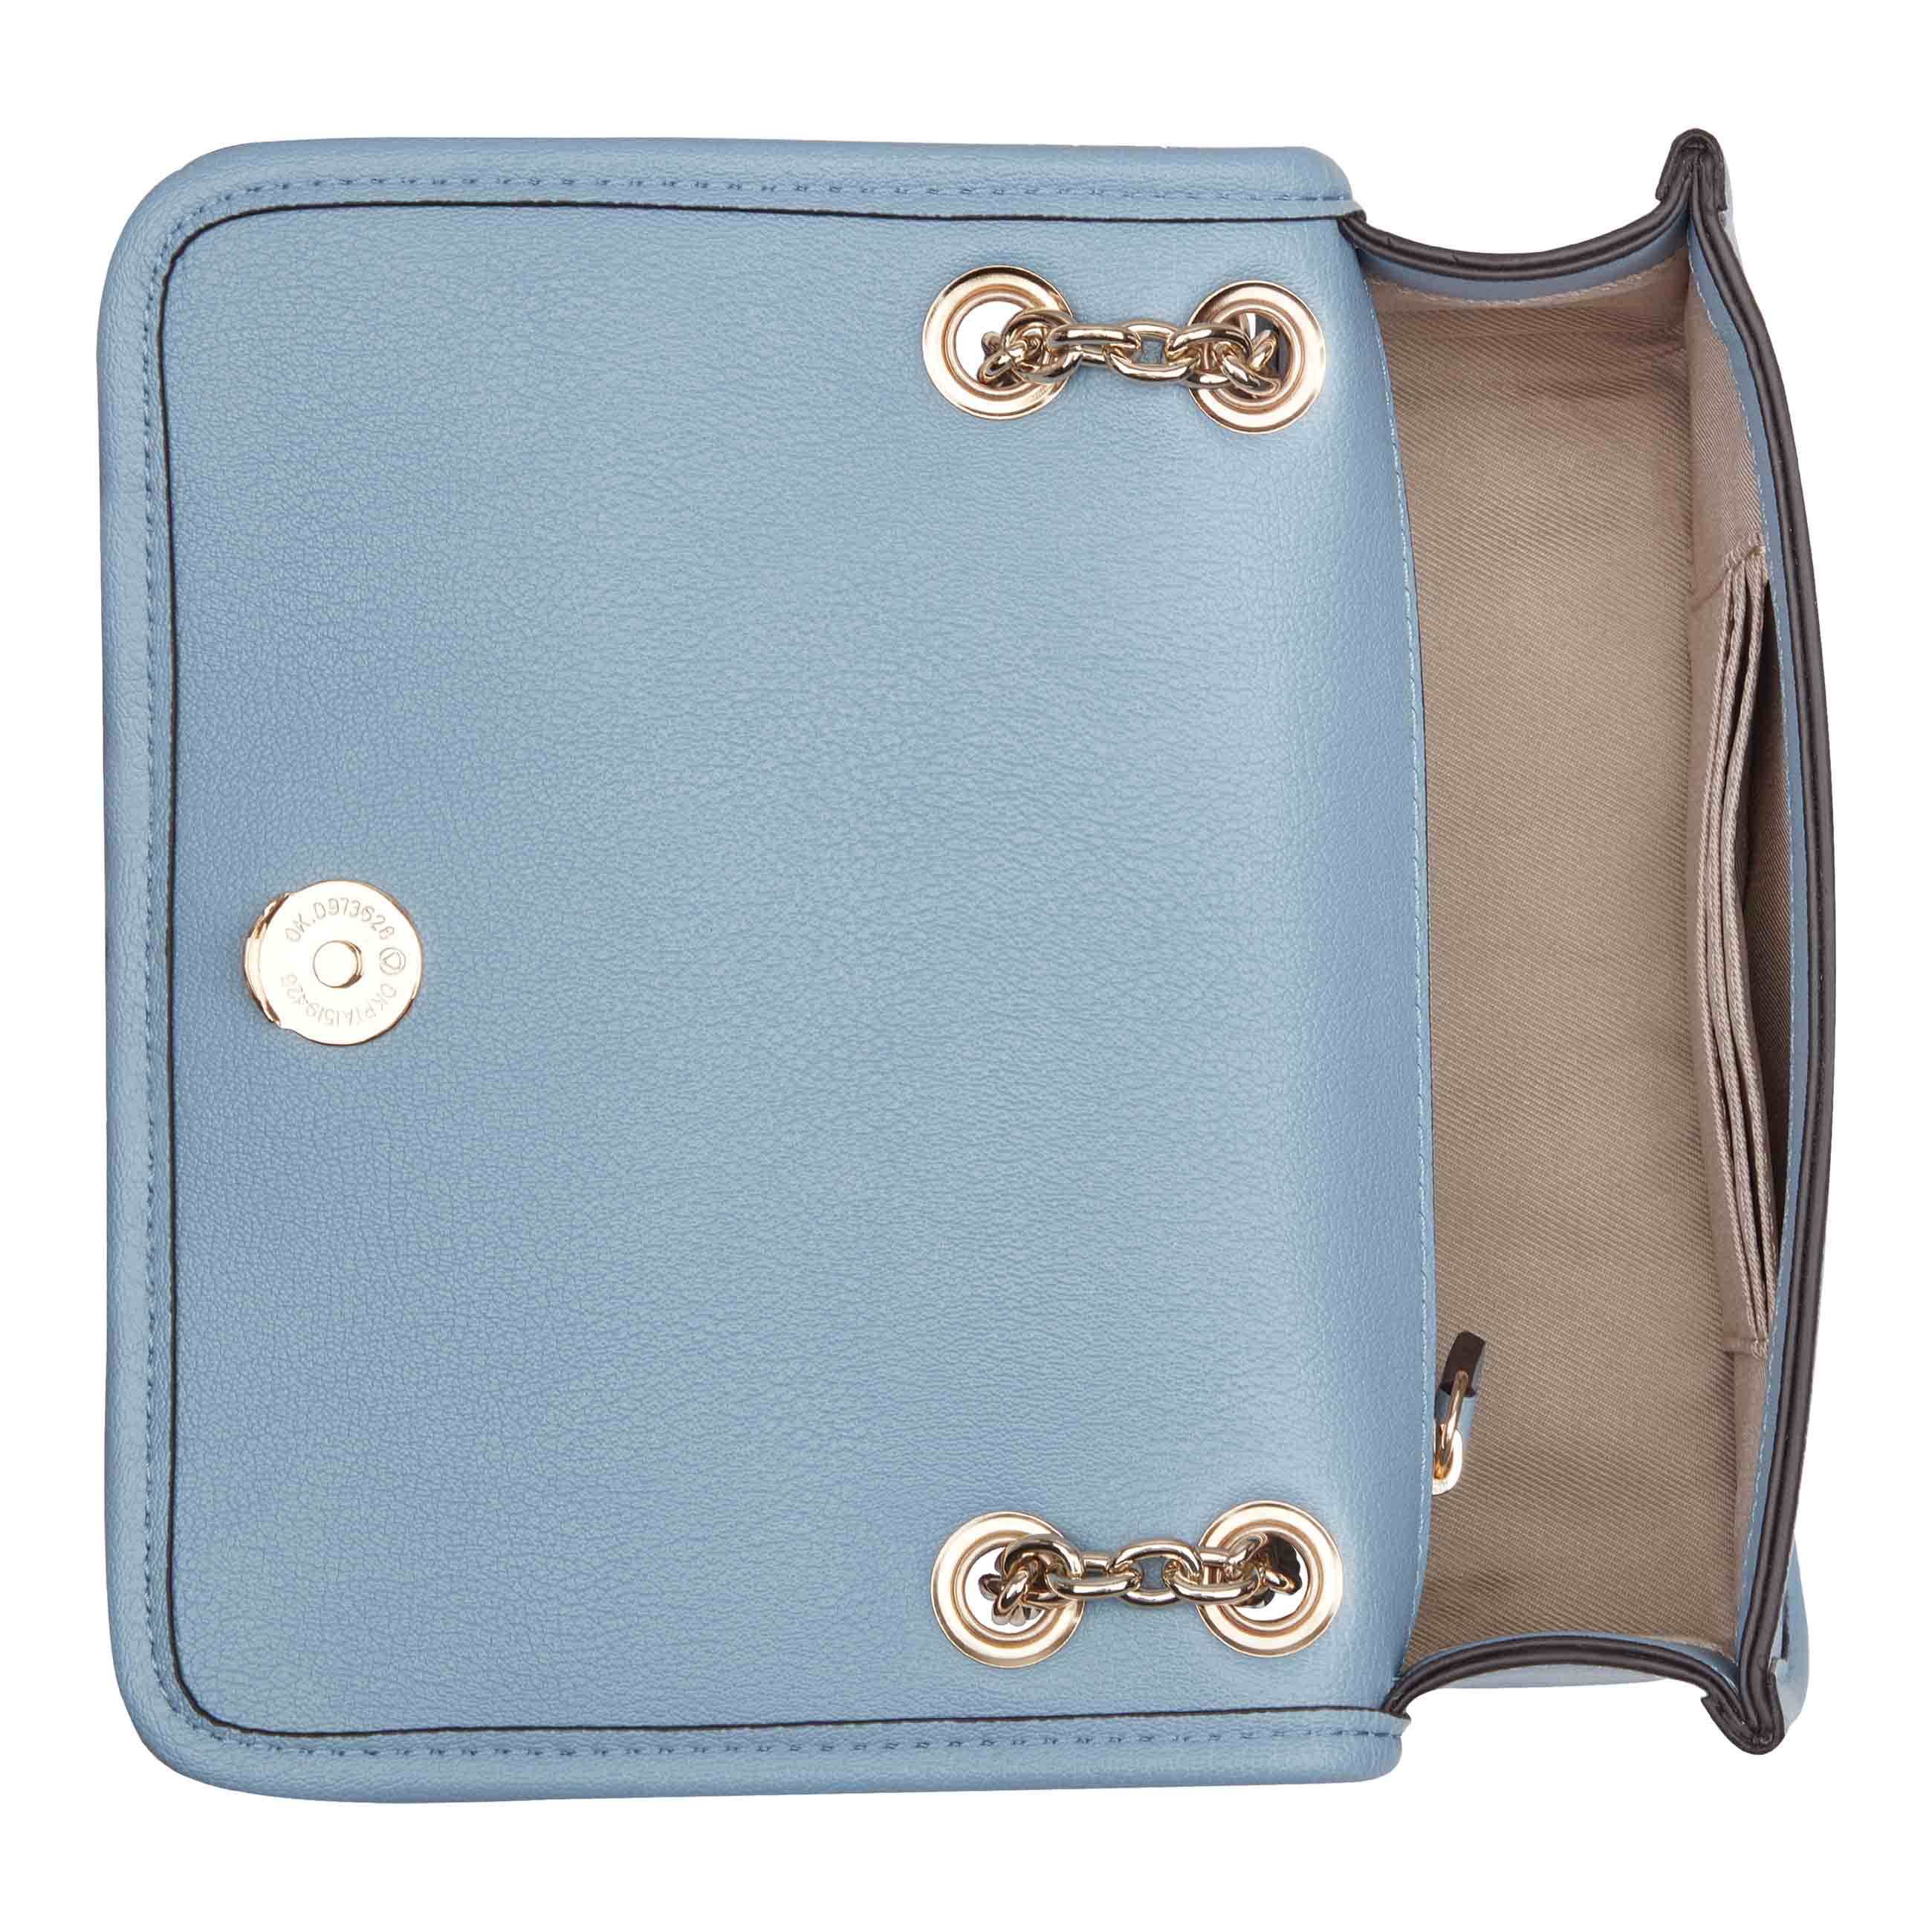 Nine West Turquoise blue purse handbag crossbody with gold chain strap |  eBay